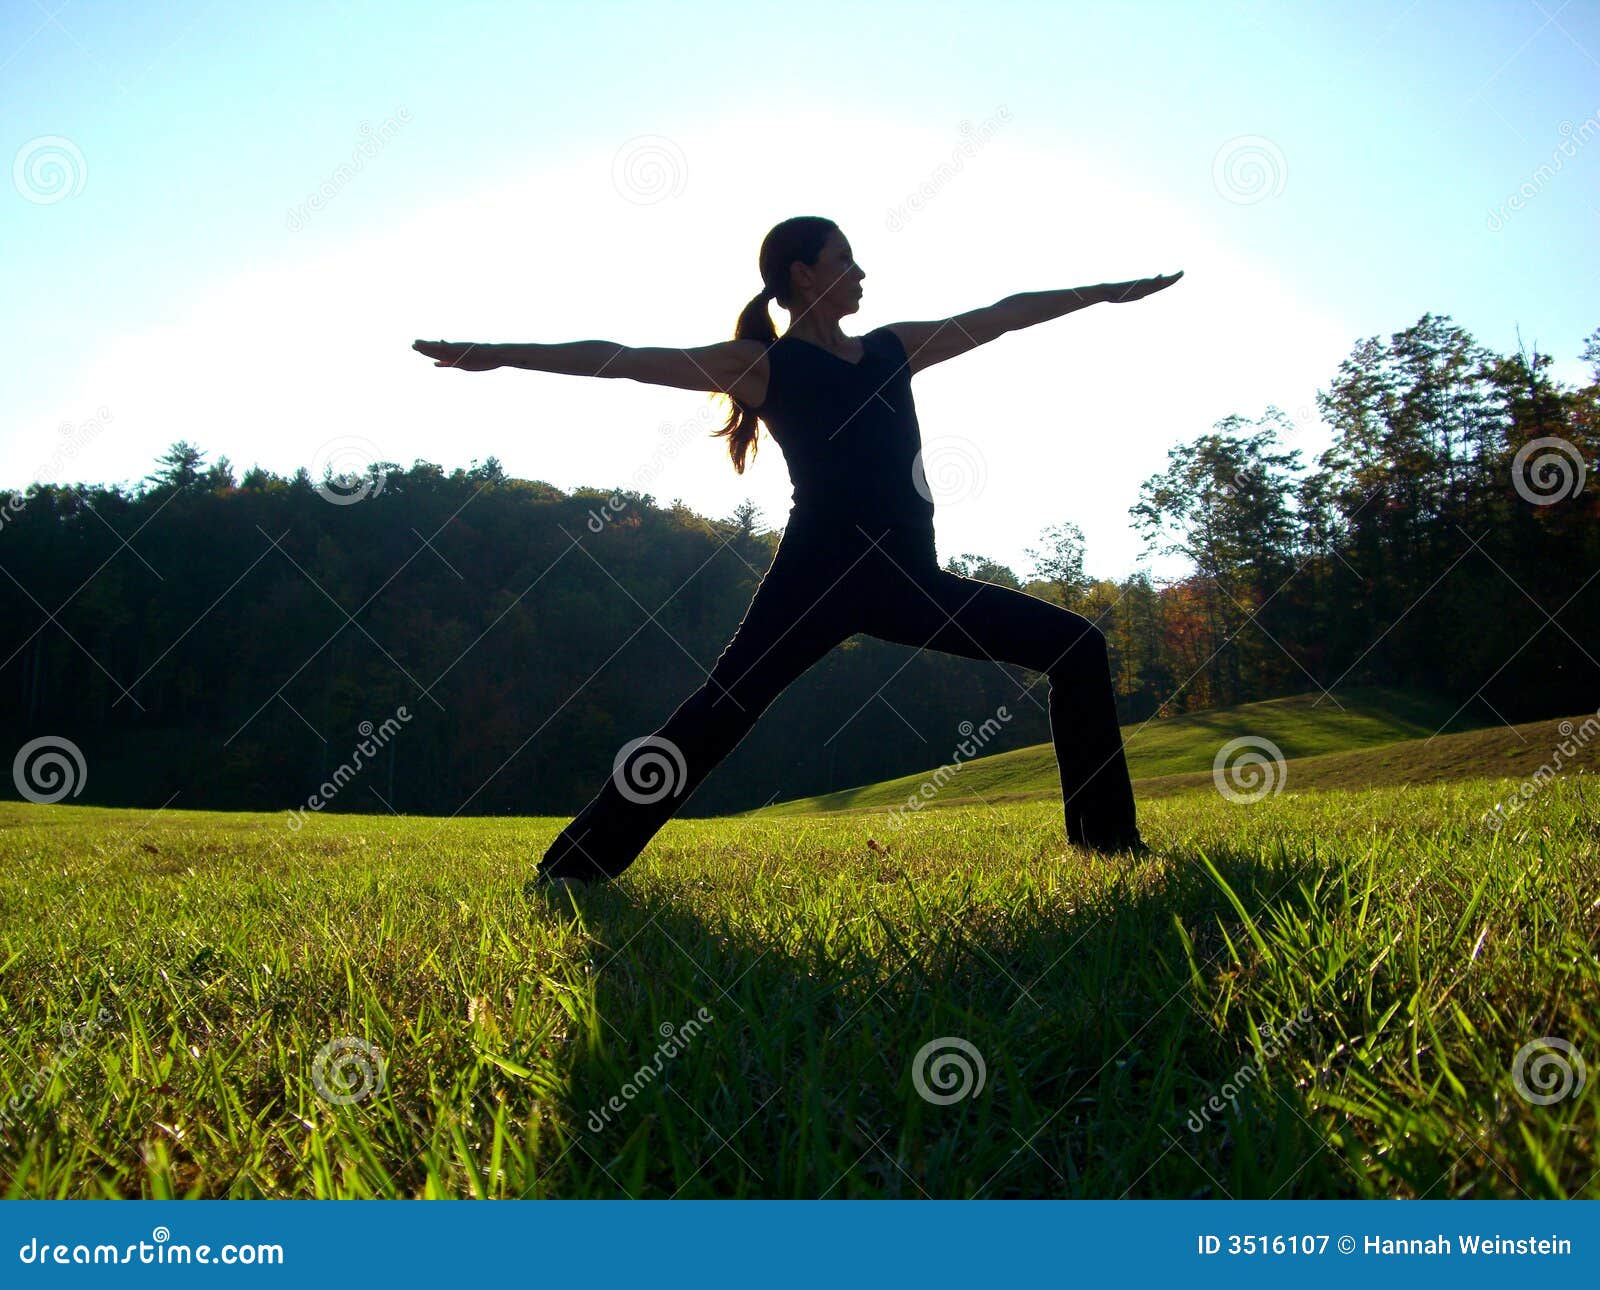 yoga warrior pose